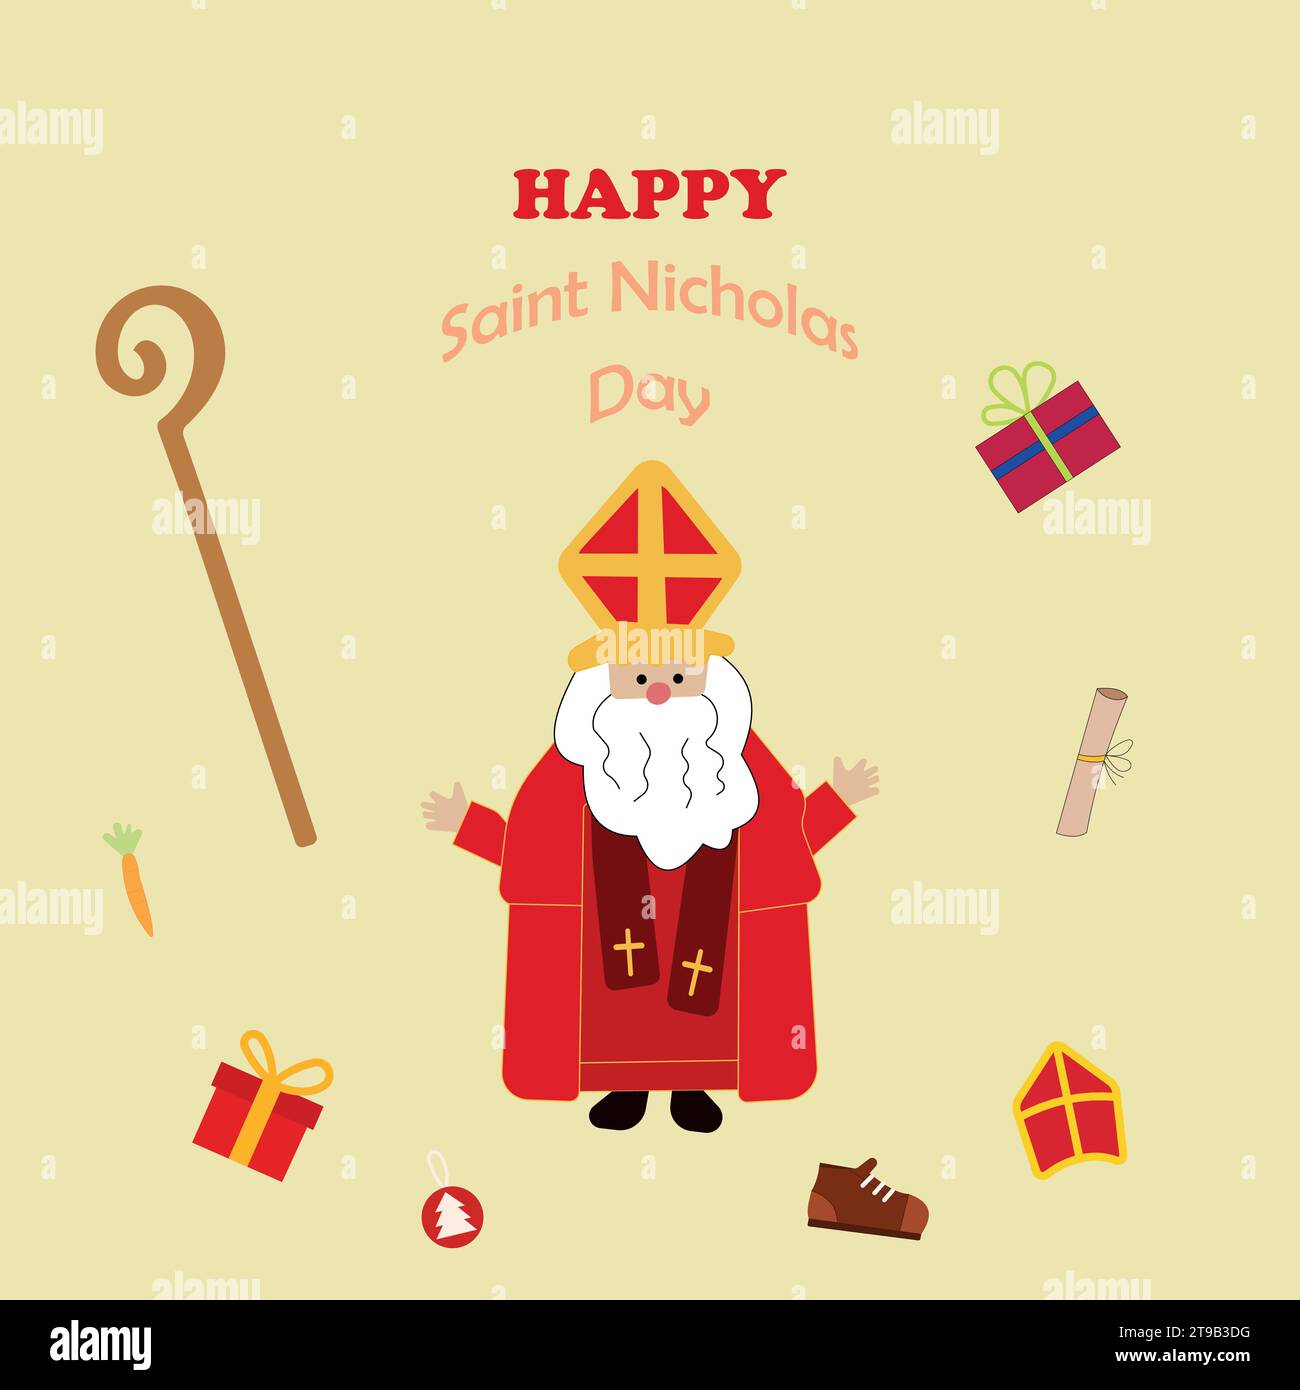 Happy Sinterklaas Day. December 5. Saint Nicholas Day celebration. Saint Nicholas Day background. Stock Vector